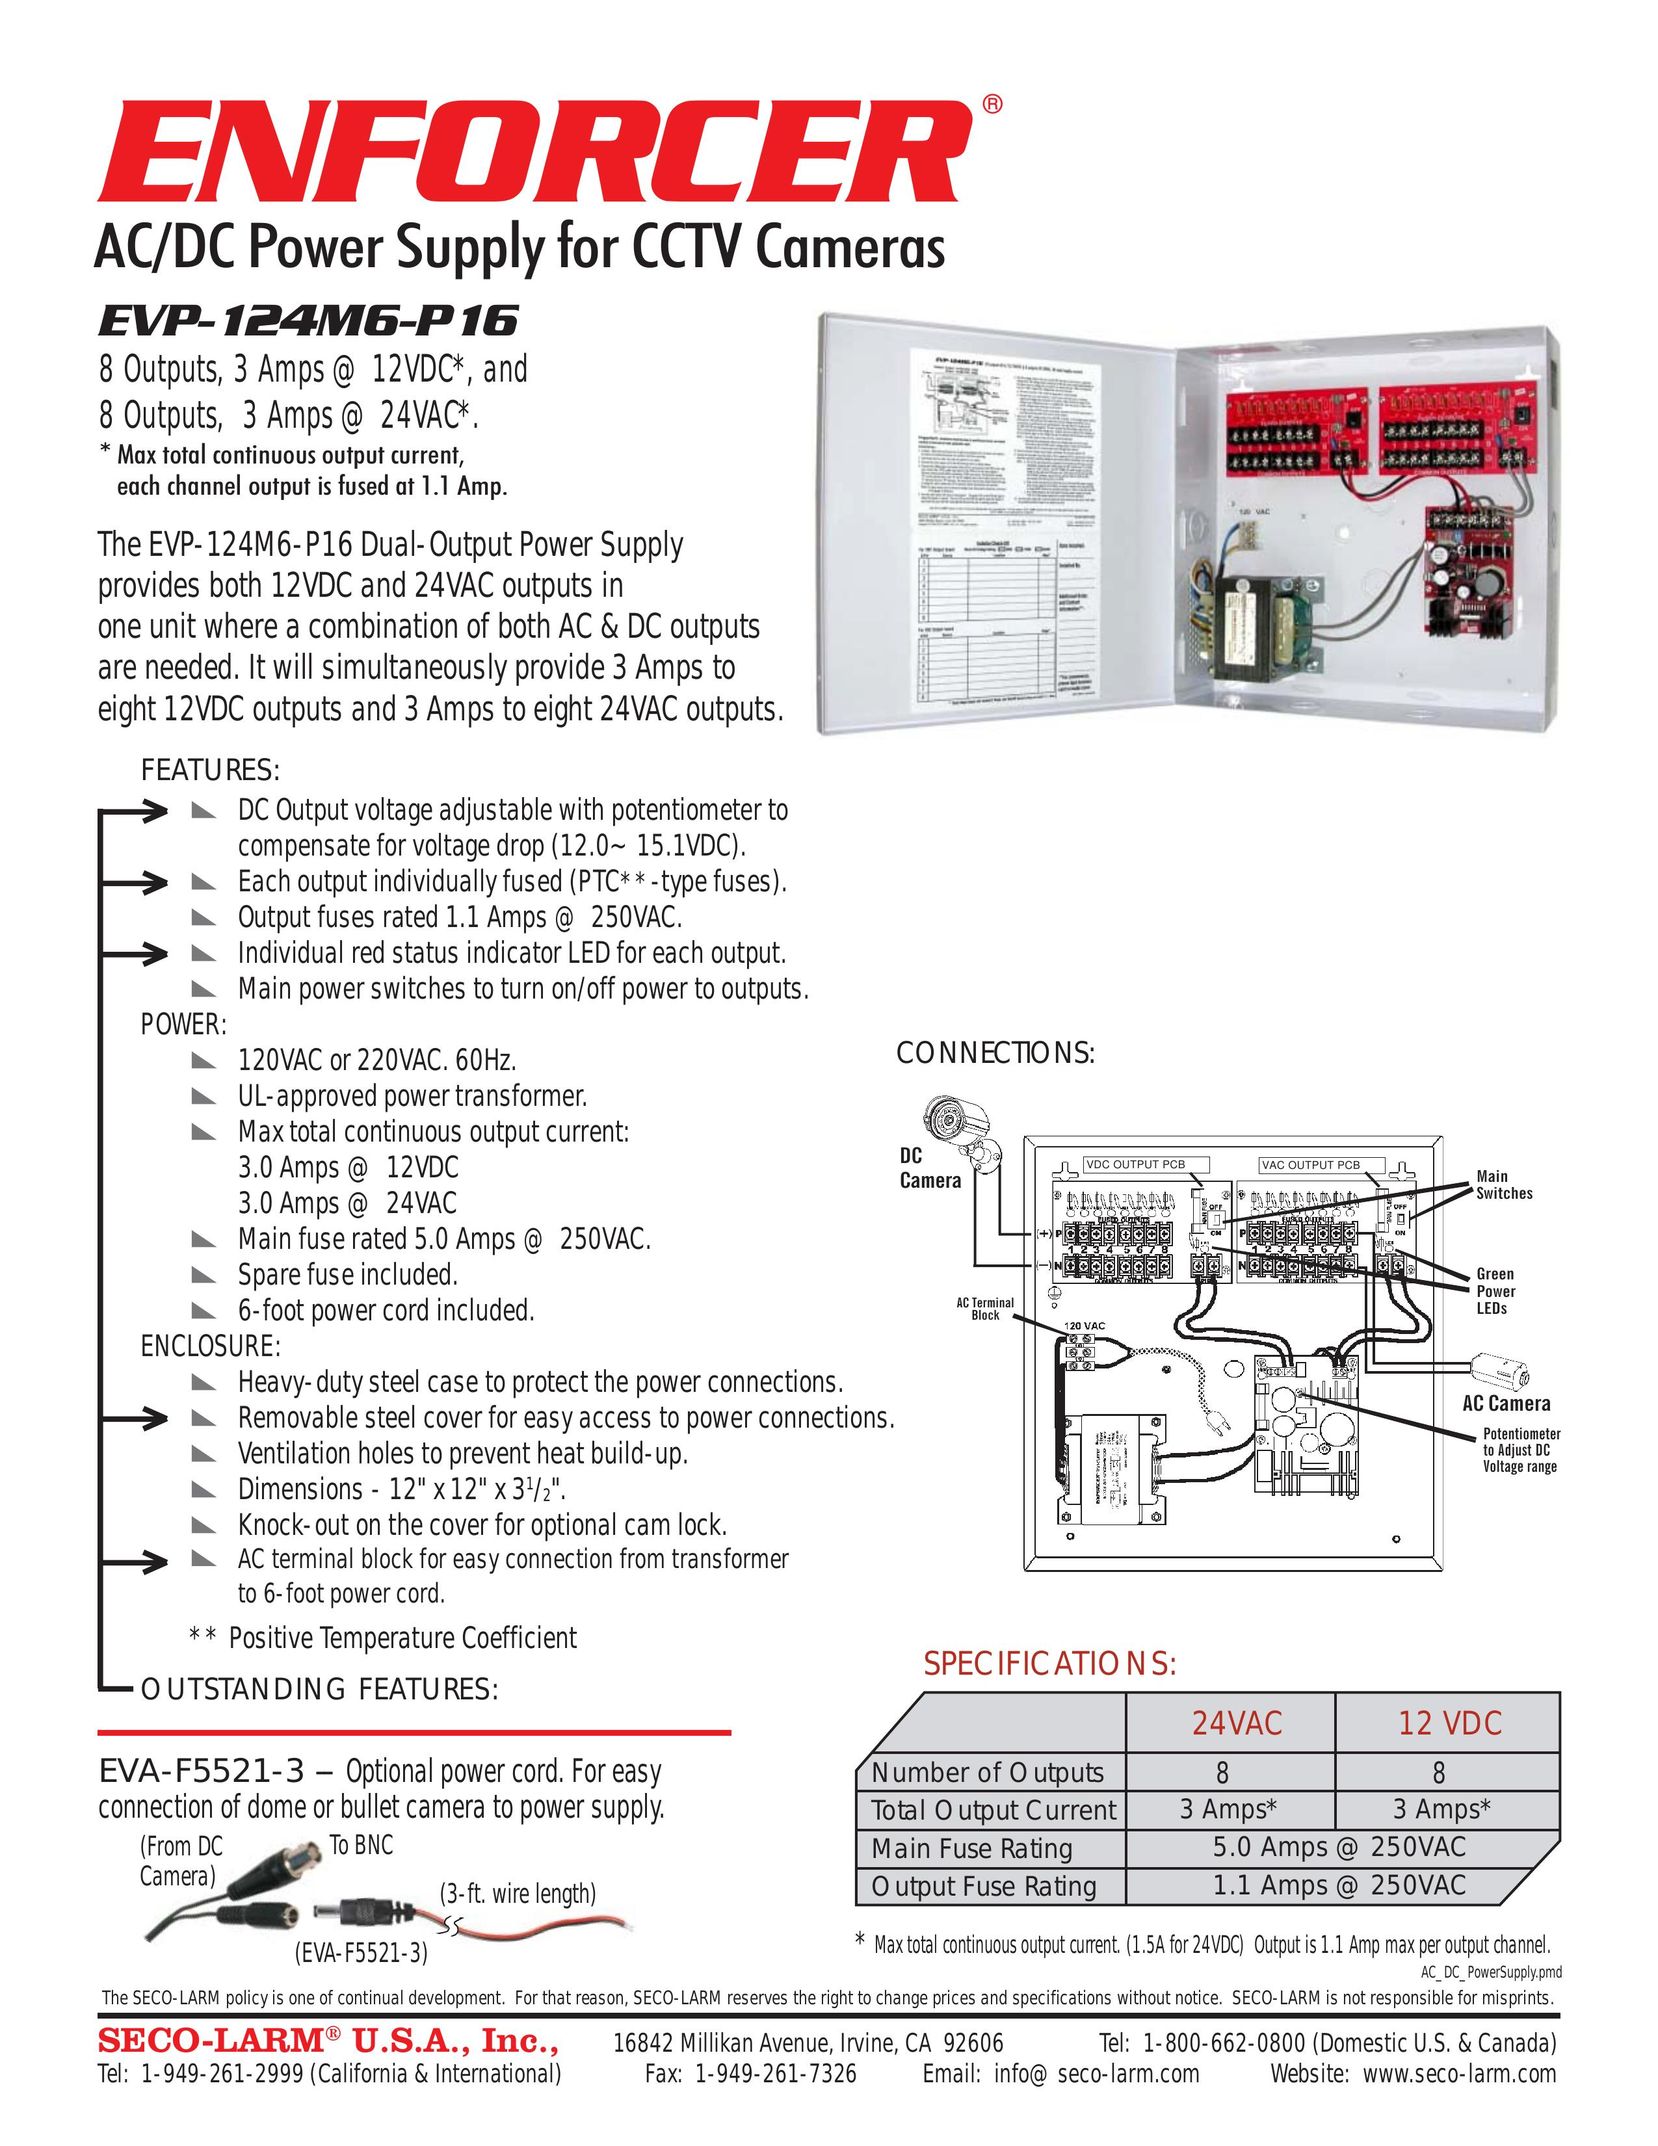 SECO-LARM USA EVP-124M6-P16 Power Supply User Manual